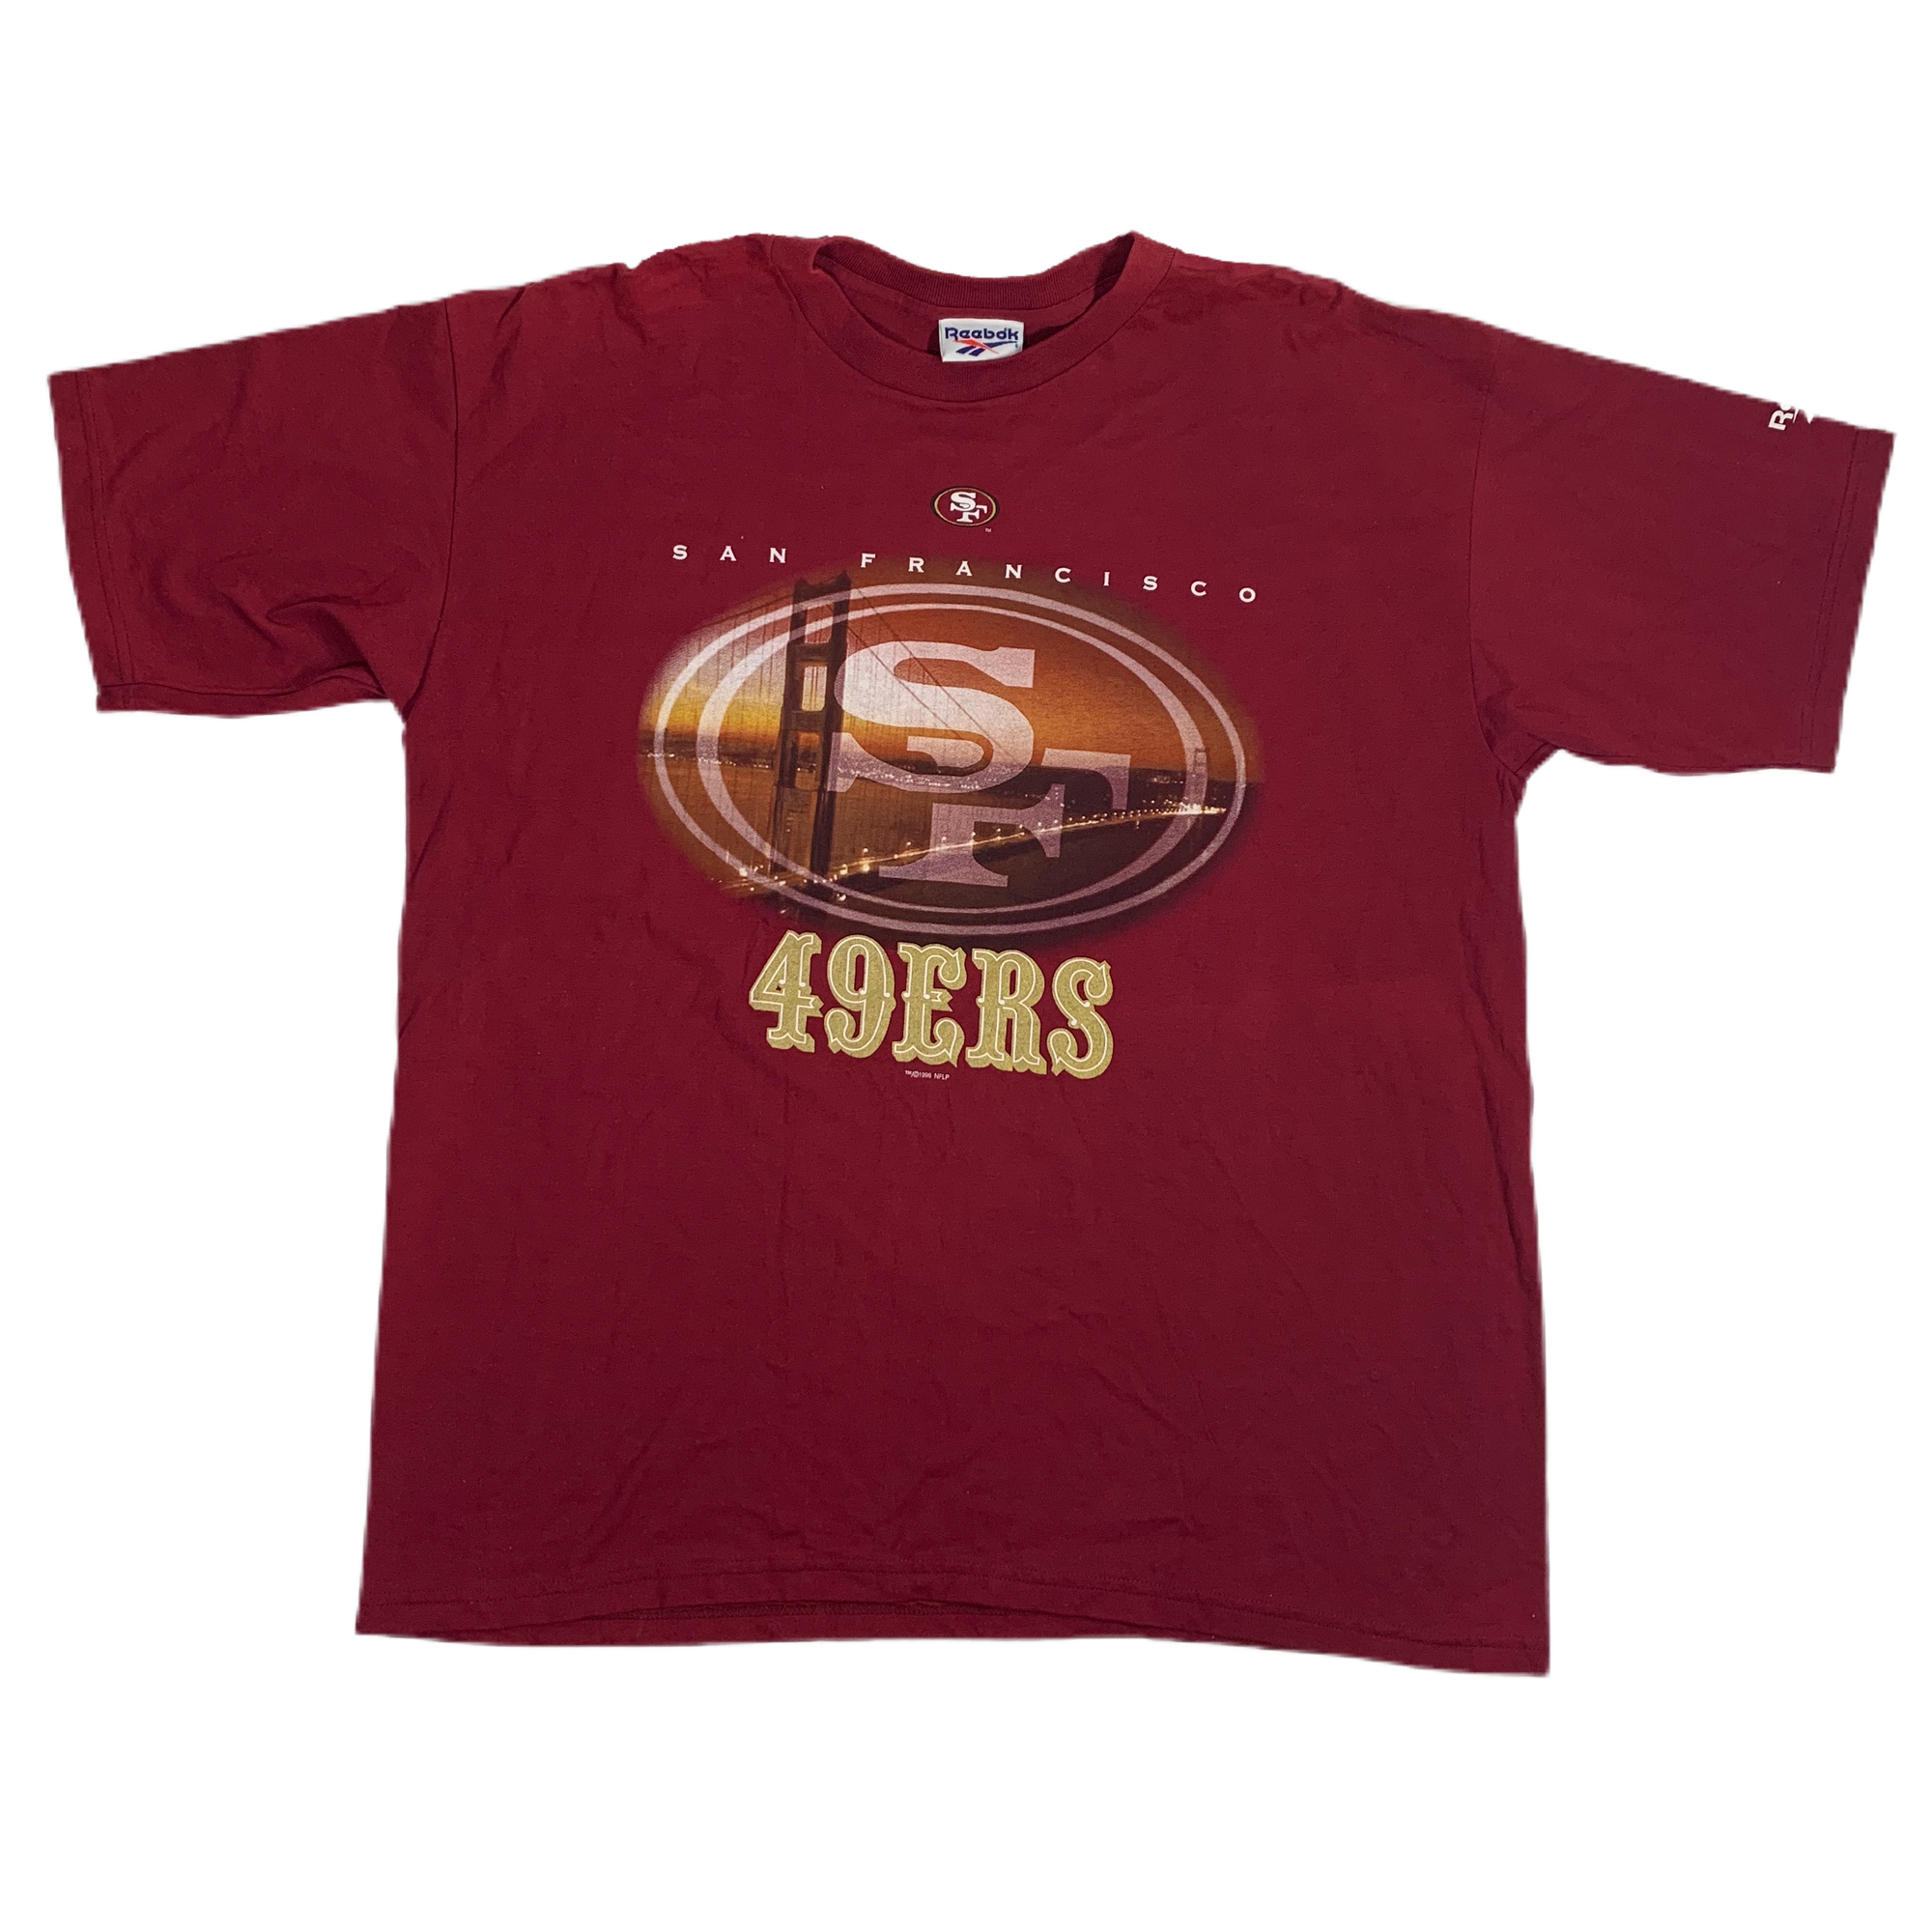 Vintage Reebok San Francisco "49ers" T-Shirt - jointcustodydc